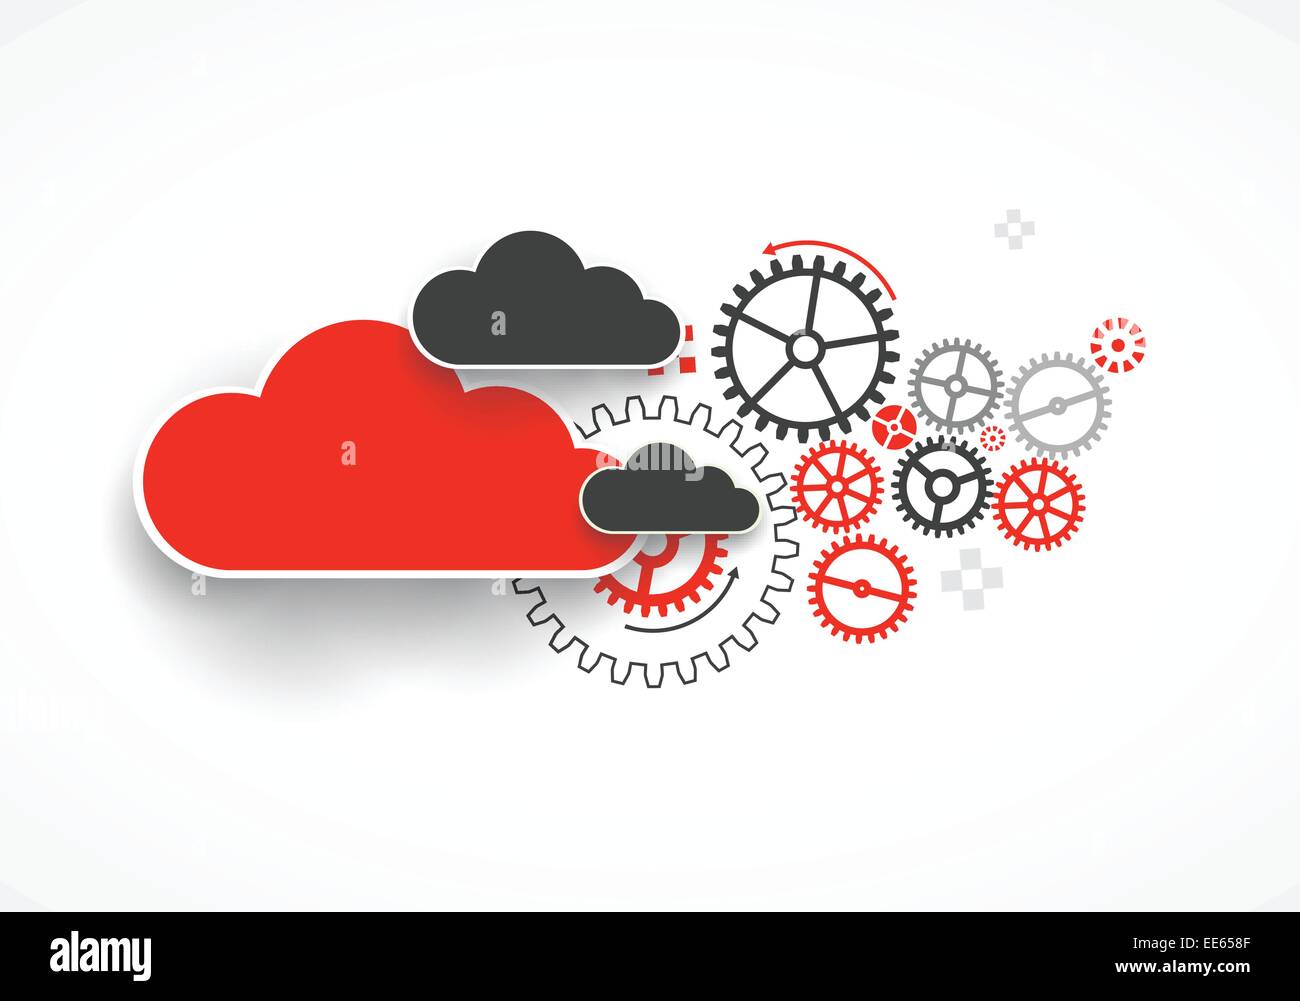 Web Cloud Technologie Bussines abstrakten Hintergrund. Vektor Stock Vektor